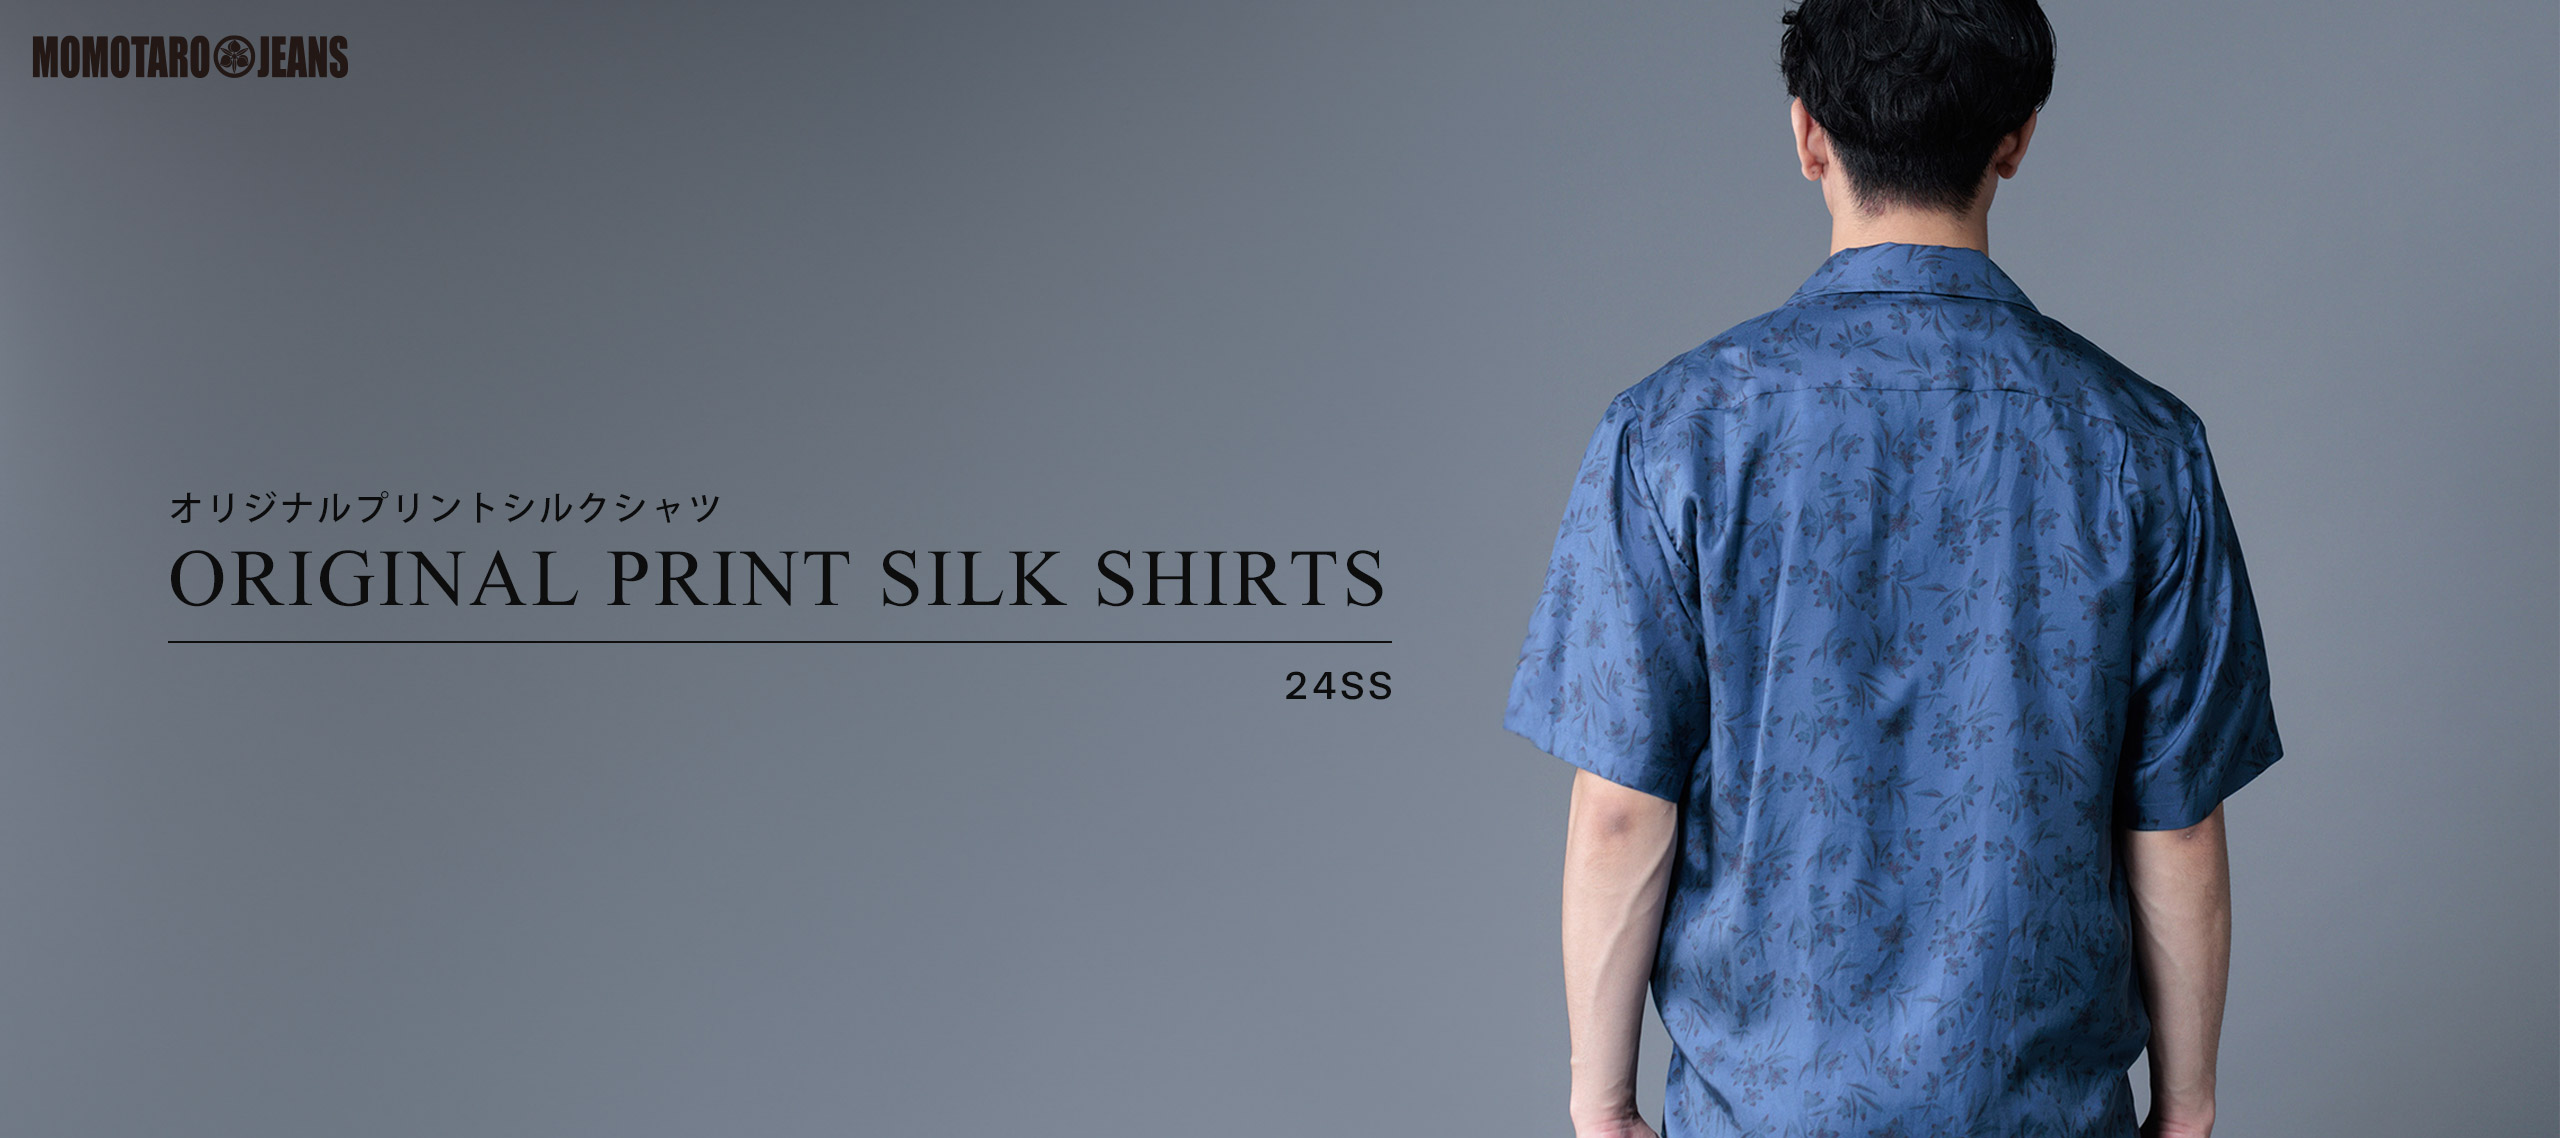 PC-banner-mj-24ss-silkprintshirts